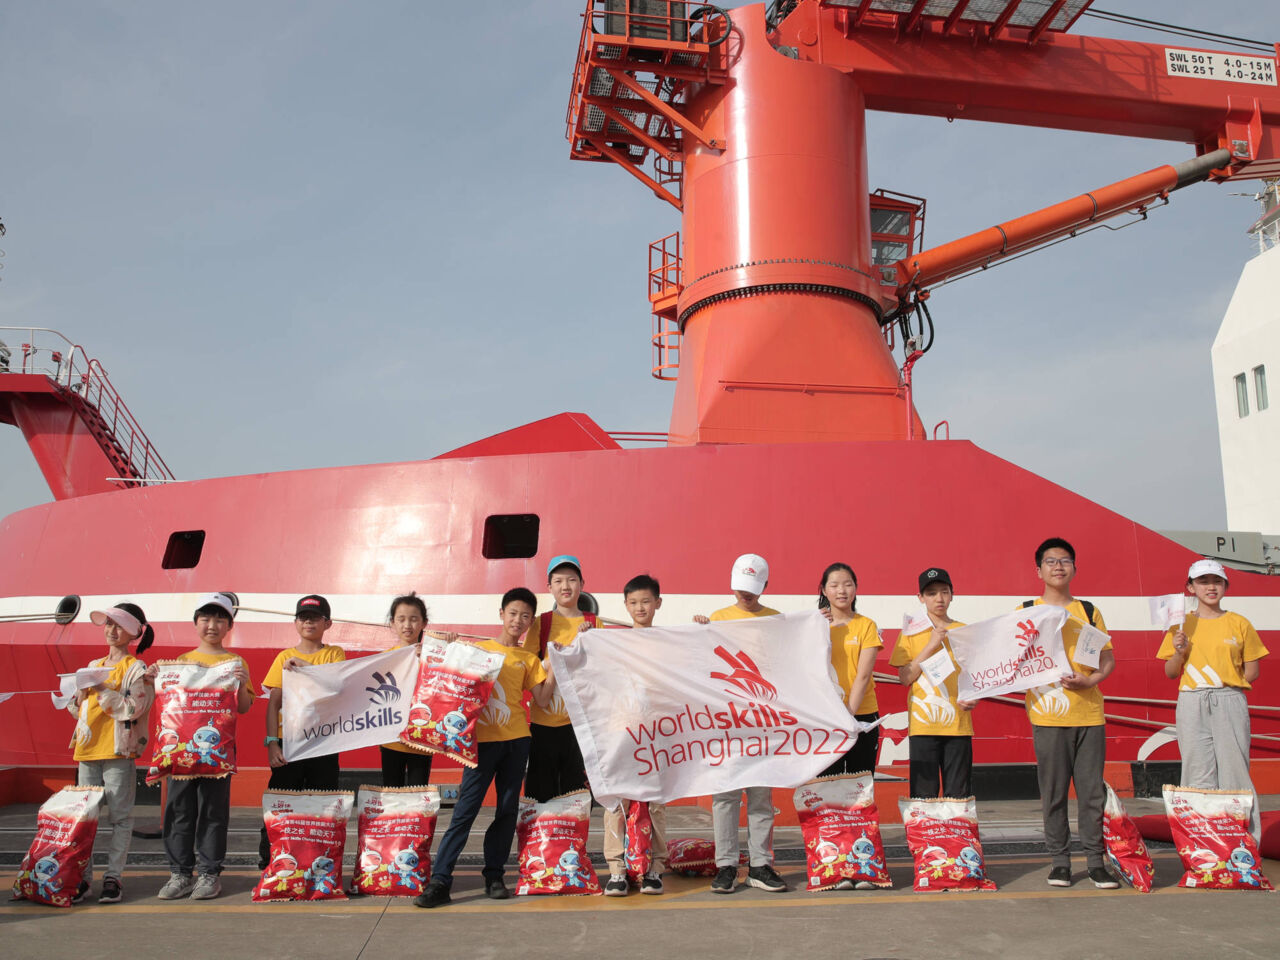 WorldSkills flag returns to Shanghai after Antarctic expedition